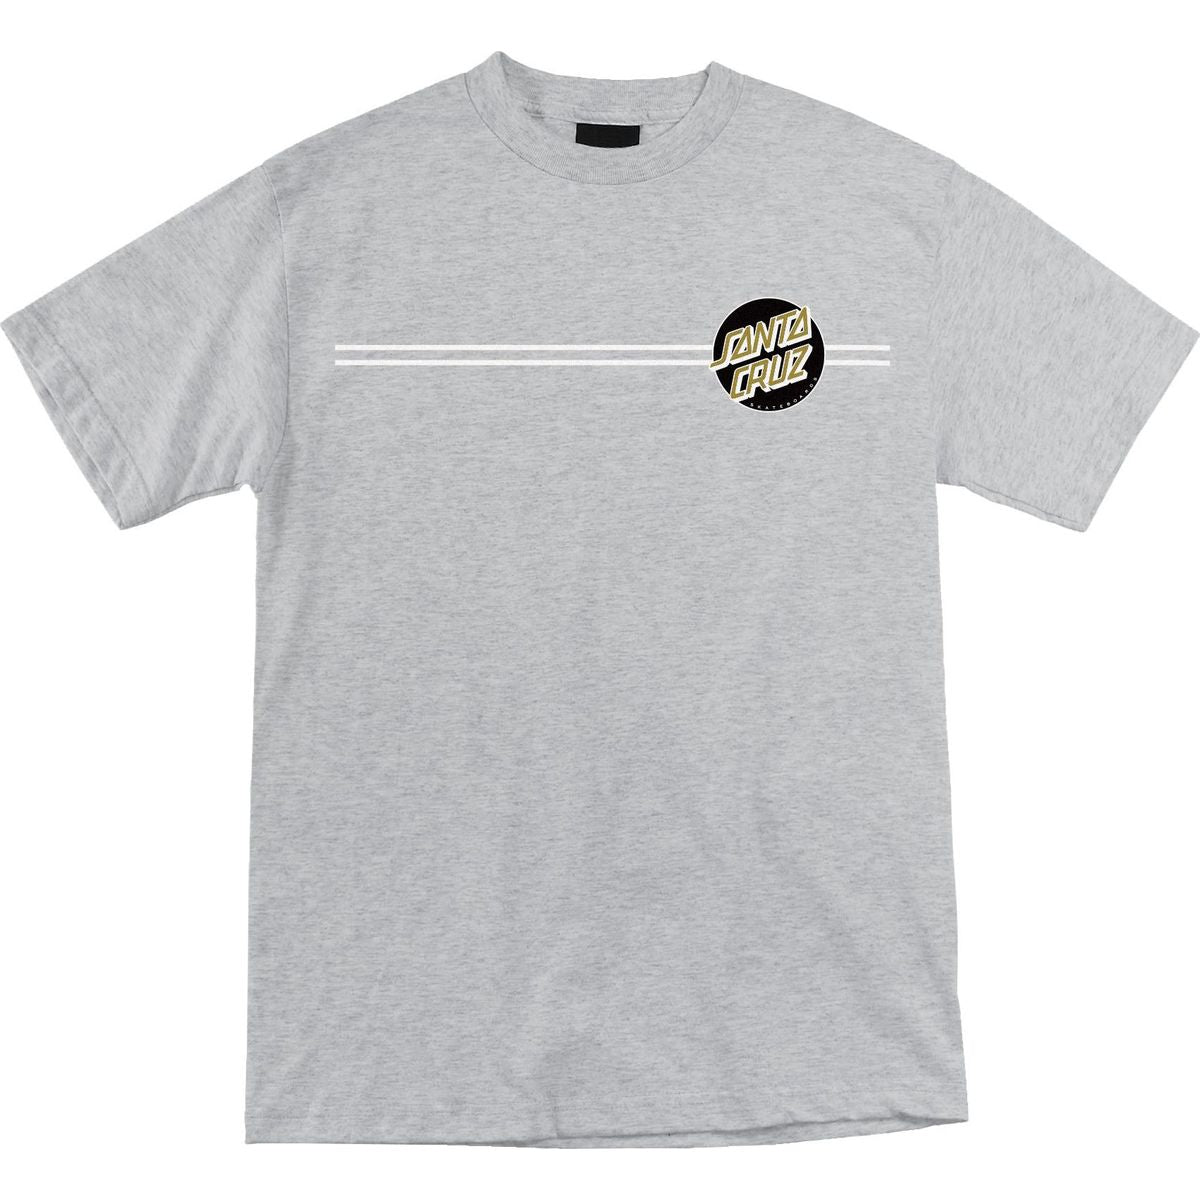 Santa Cruz Other Dot T-Shirt - Heather Grey/Black/Gold image 1